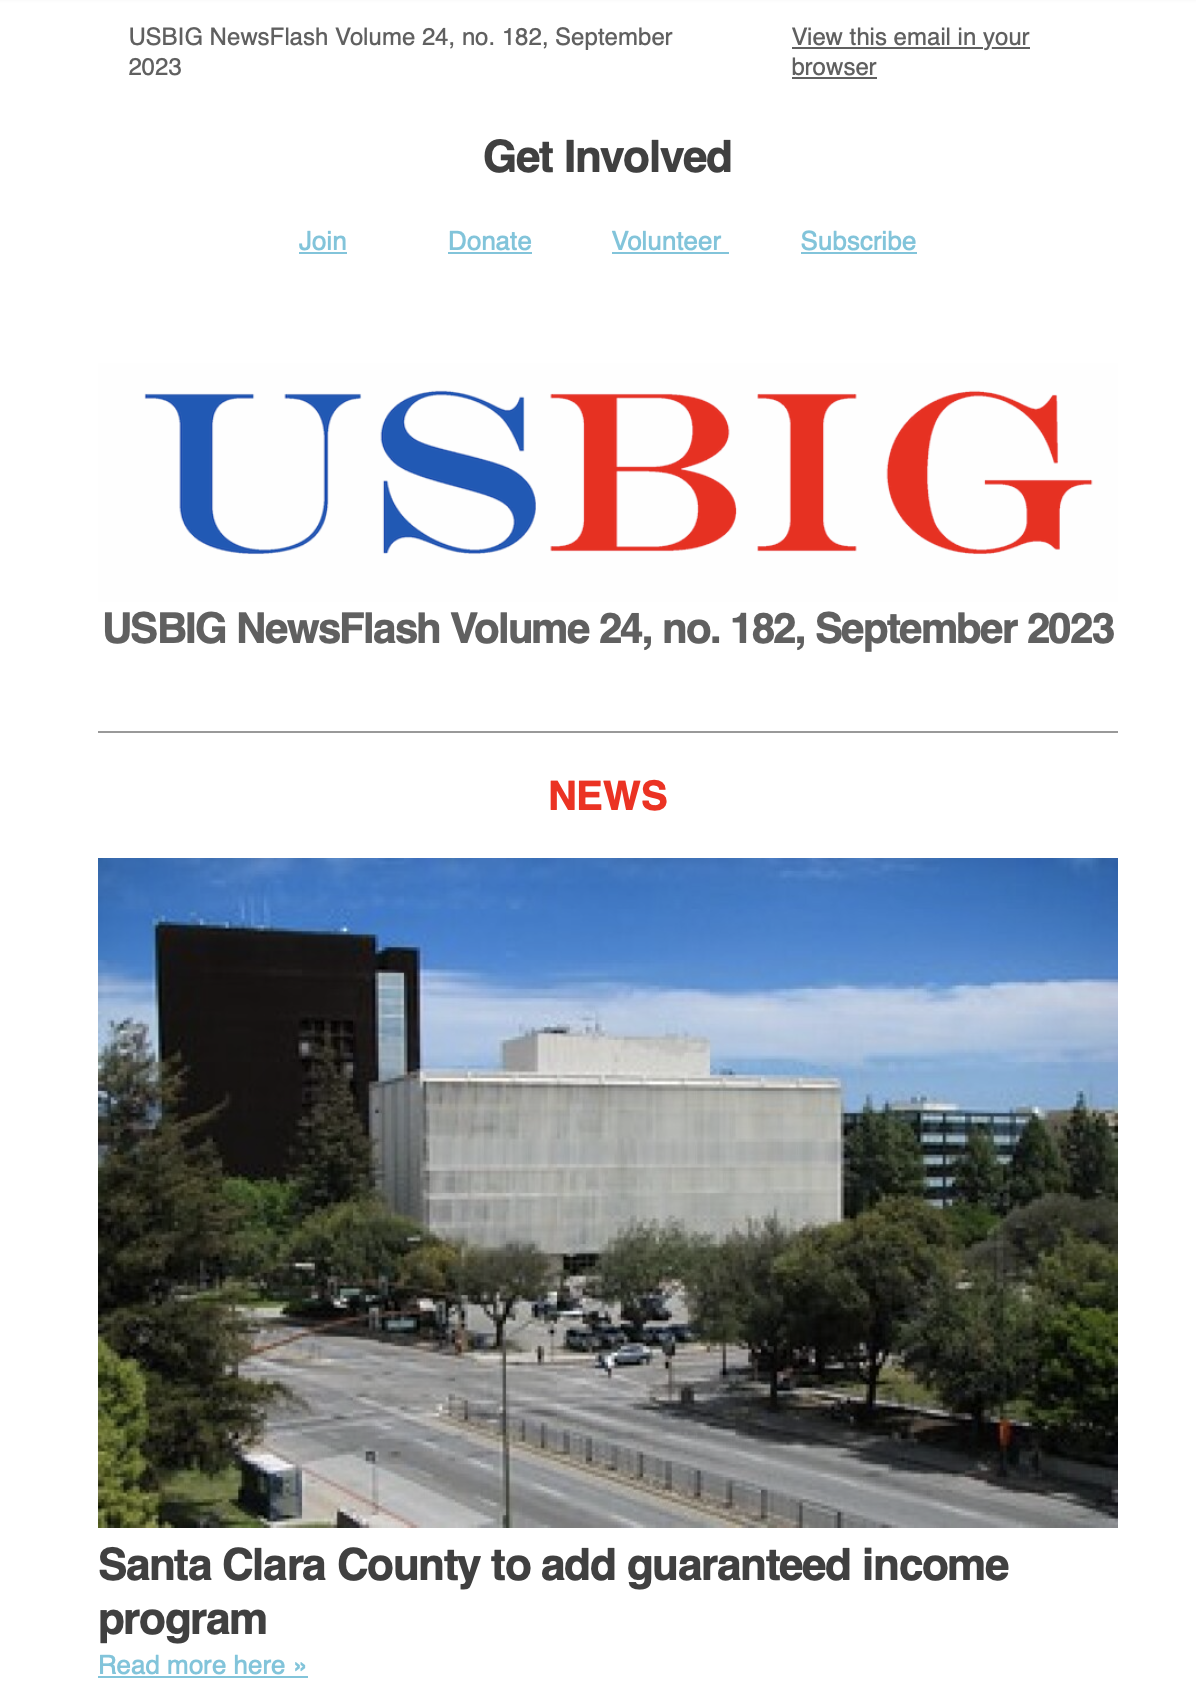 USBIG Newsflash, August 2023